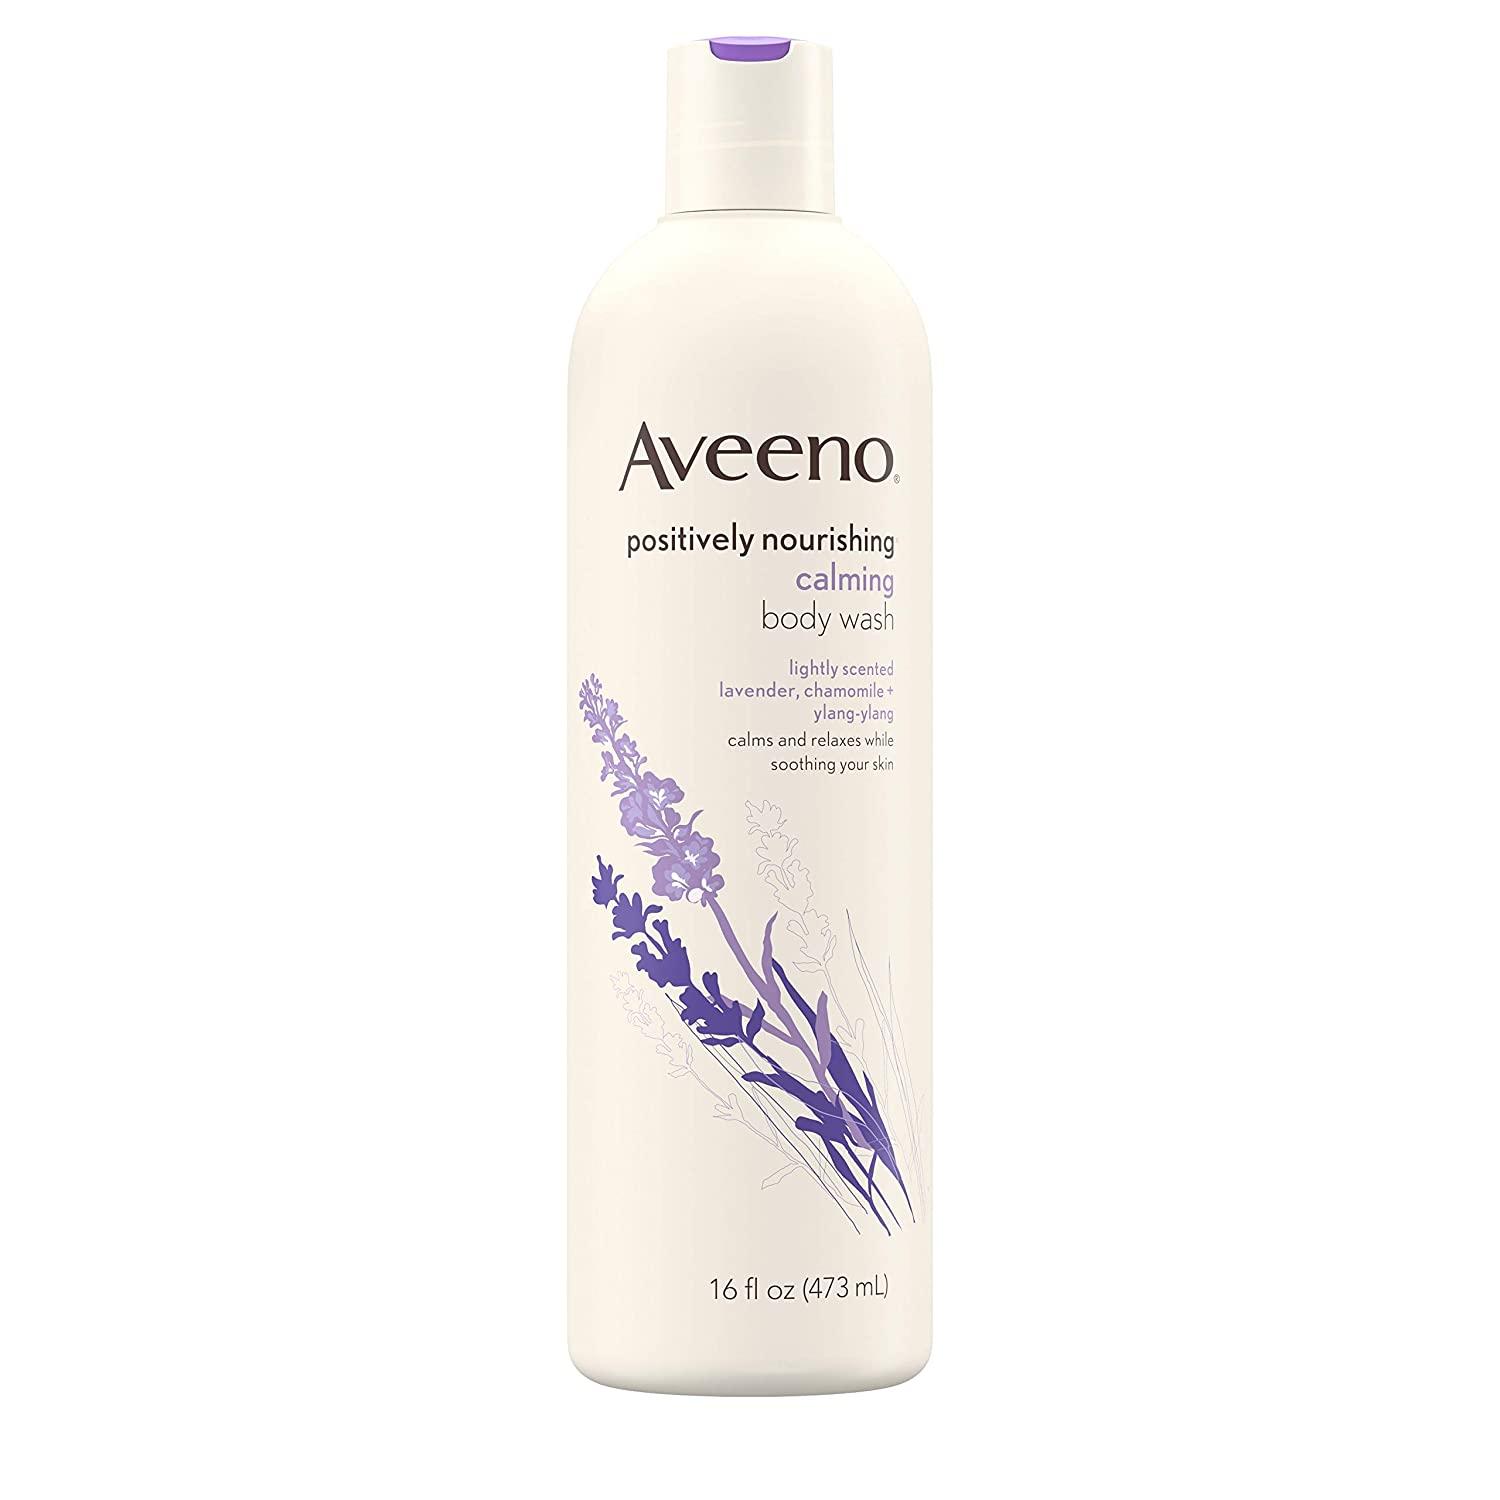 2 Aveeno Positively Nourishing Calming Body Wash for $8.23 Shipped